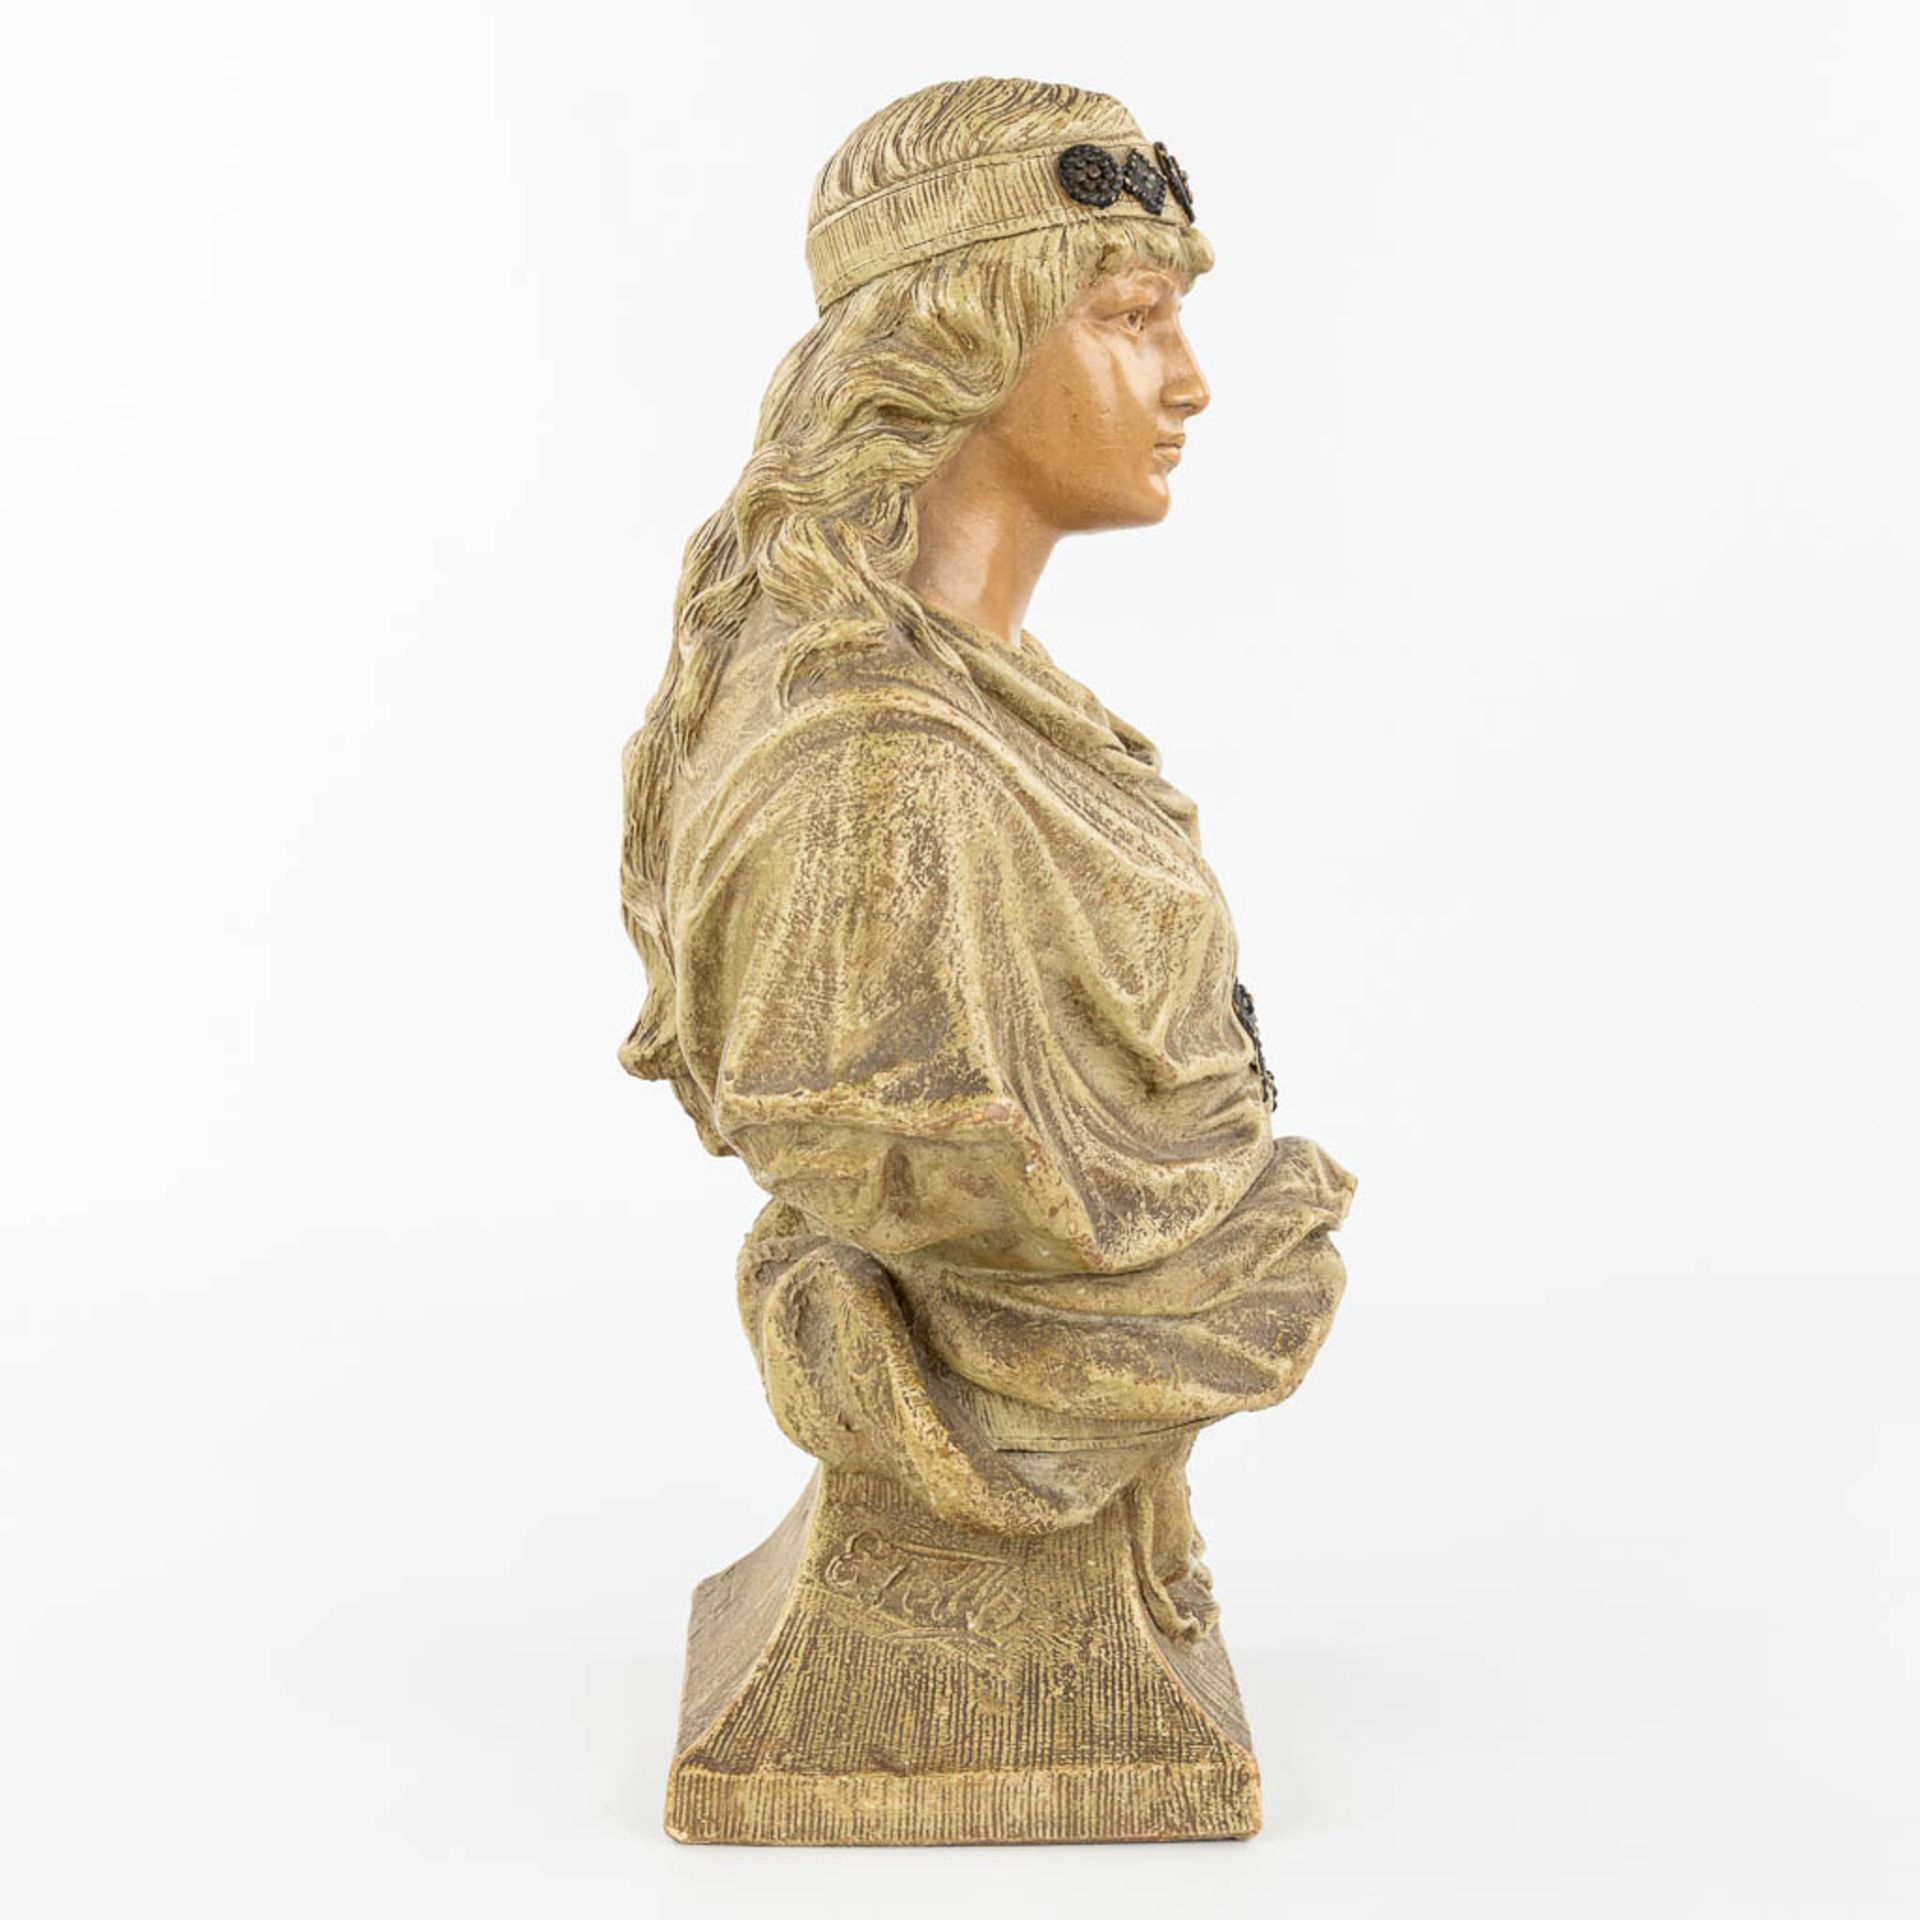 E. TELL (XIX-XX) and Friedrich GOLDSCHEIDER (1845-1897) 'Judith' a buste made of terracotta, for Gol - Image 4 of 14